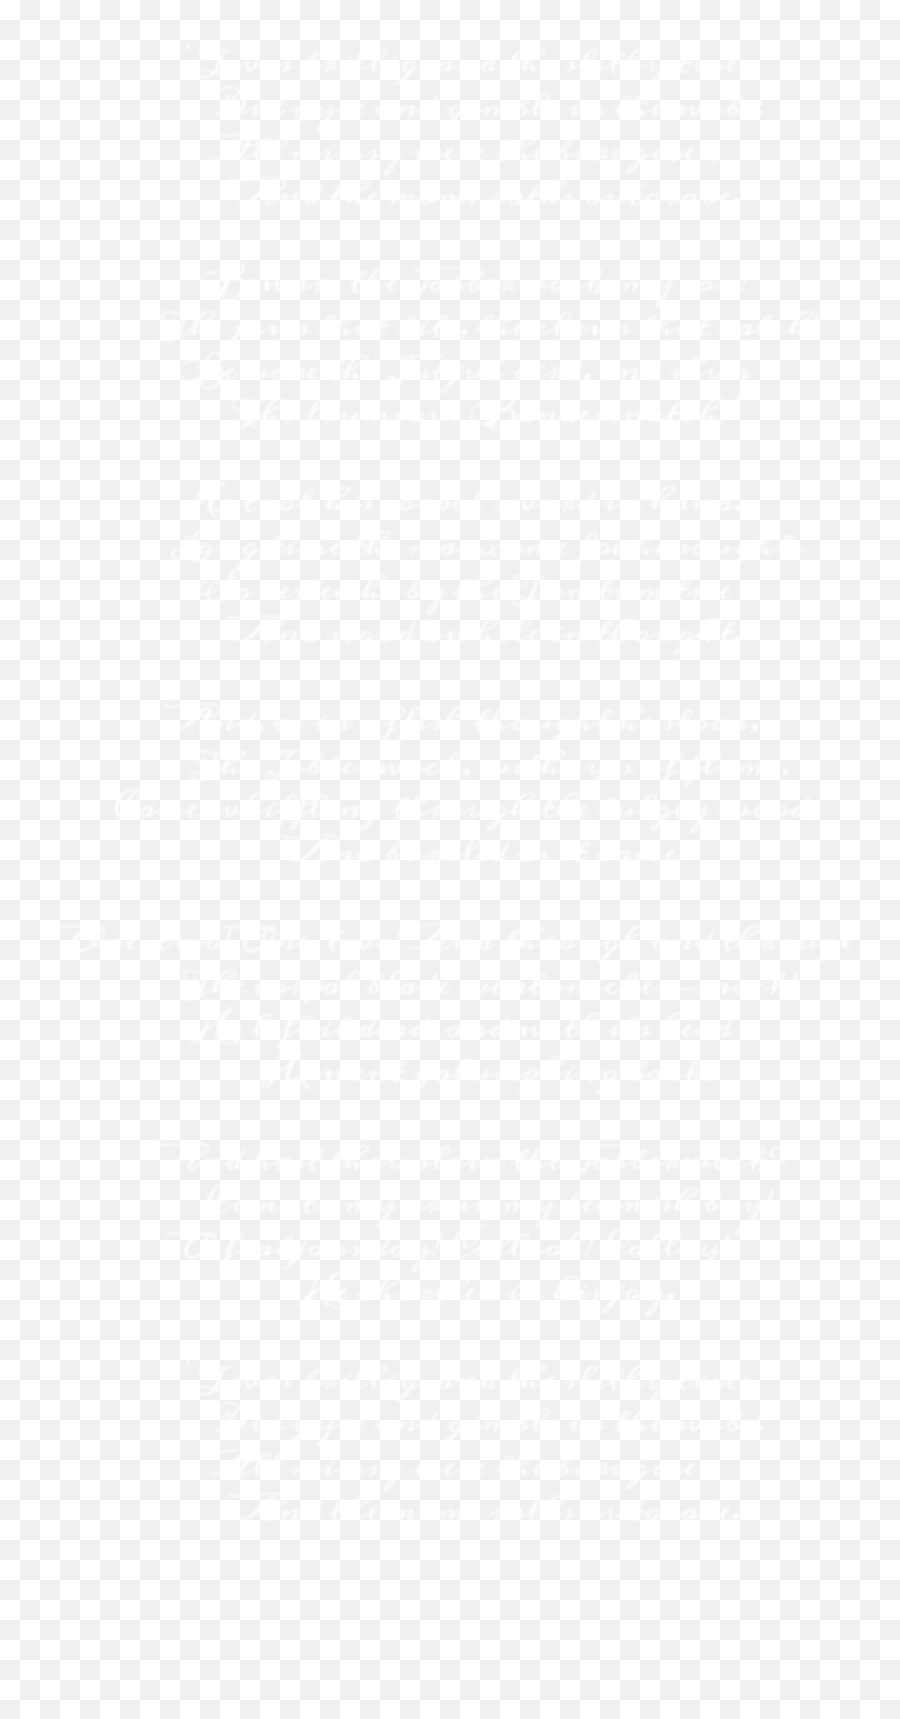 The Most Edited Paragraph Picsart - Ihs Markit Logo White Emoji,Heary Emoji